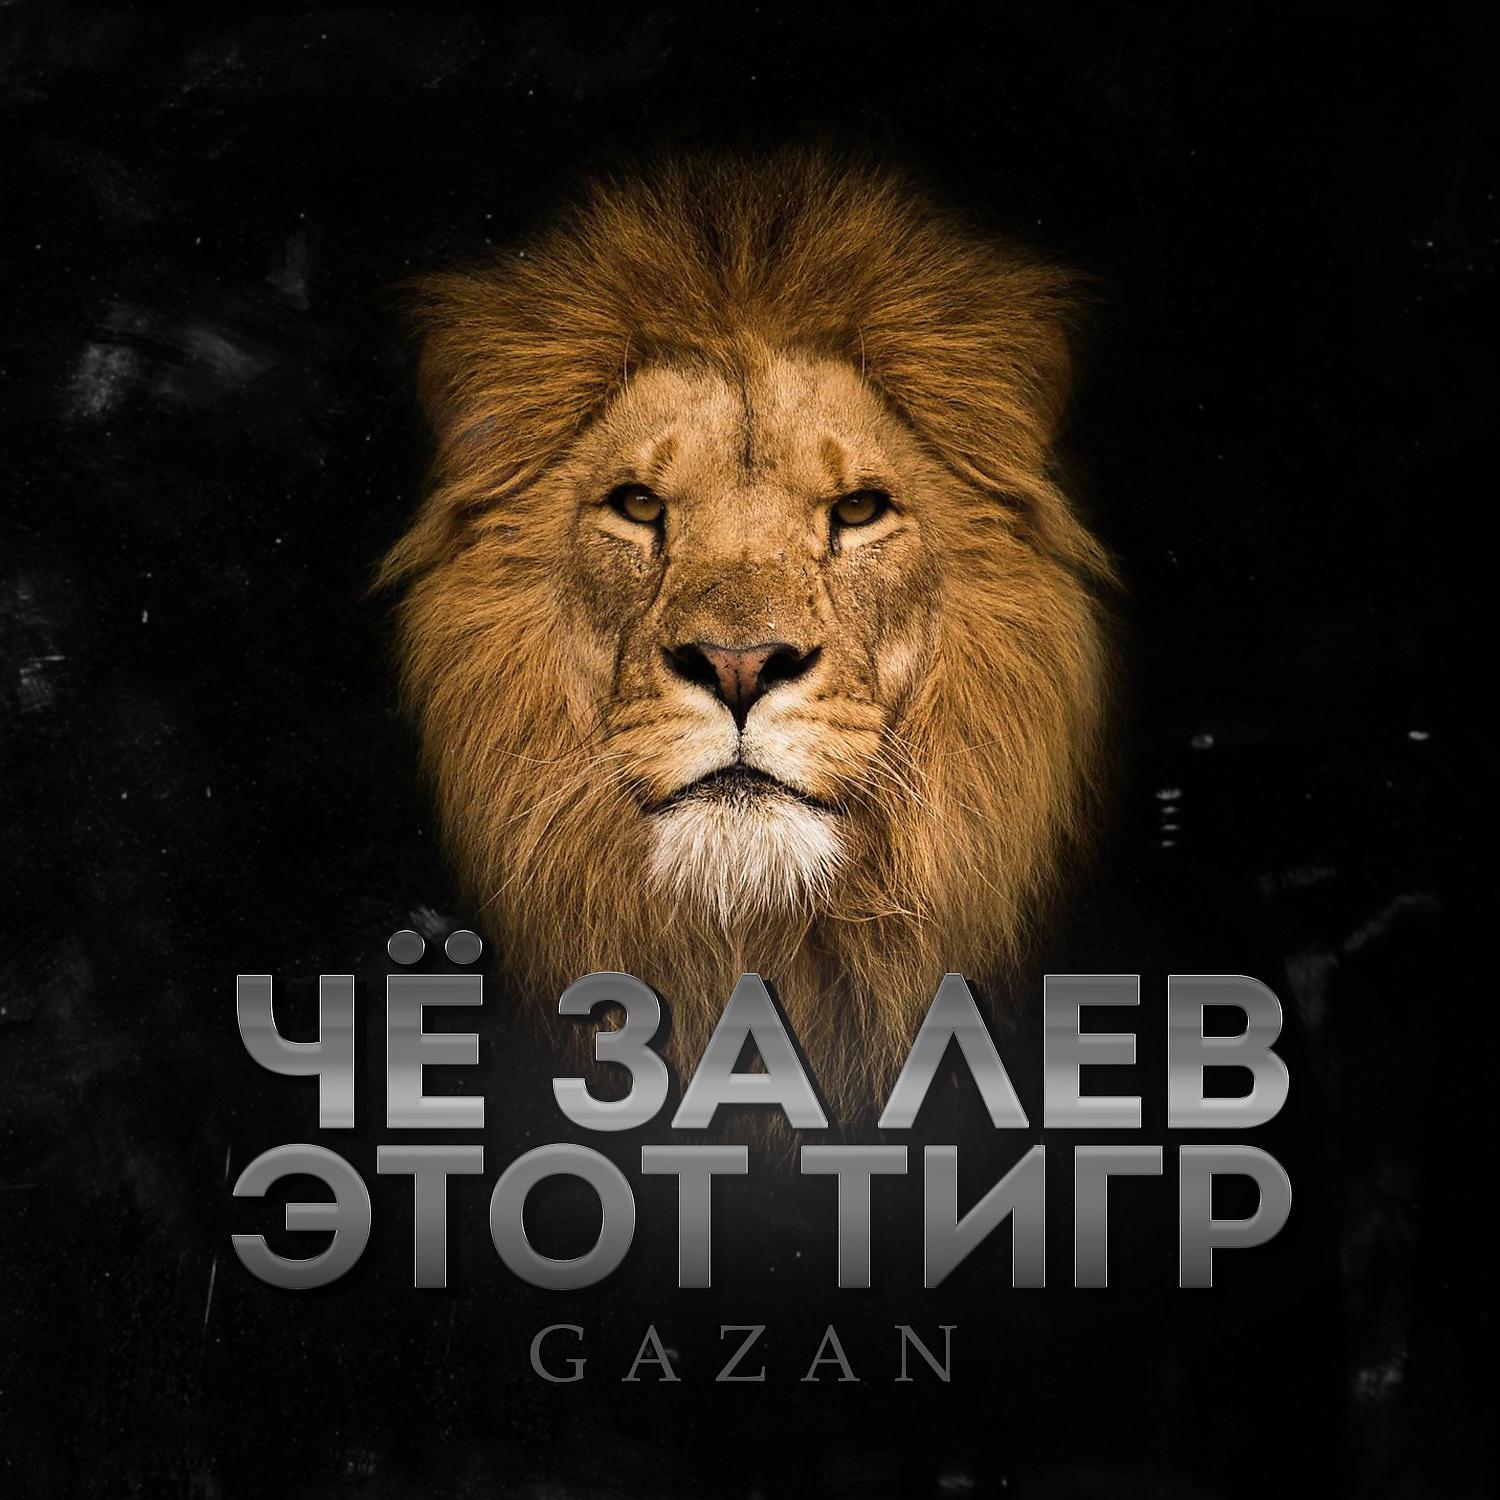 Что за тигр этот лев фраза. Че за Лев этот тигр. Газан че за Лев этот тигр. Gazan тигр.